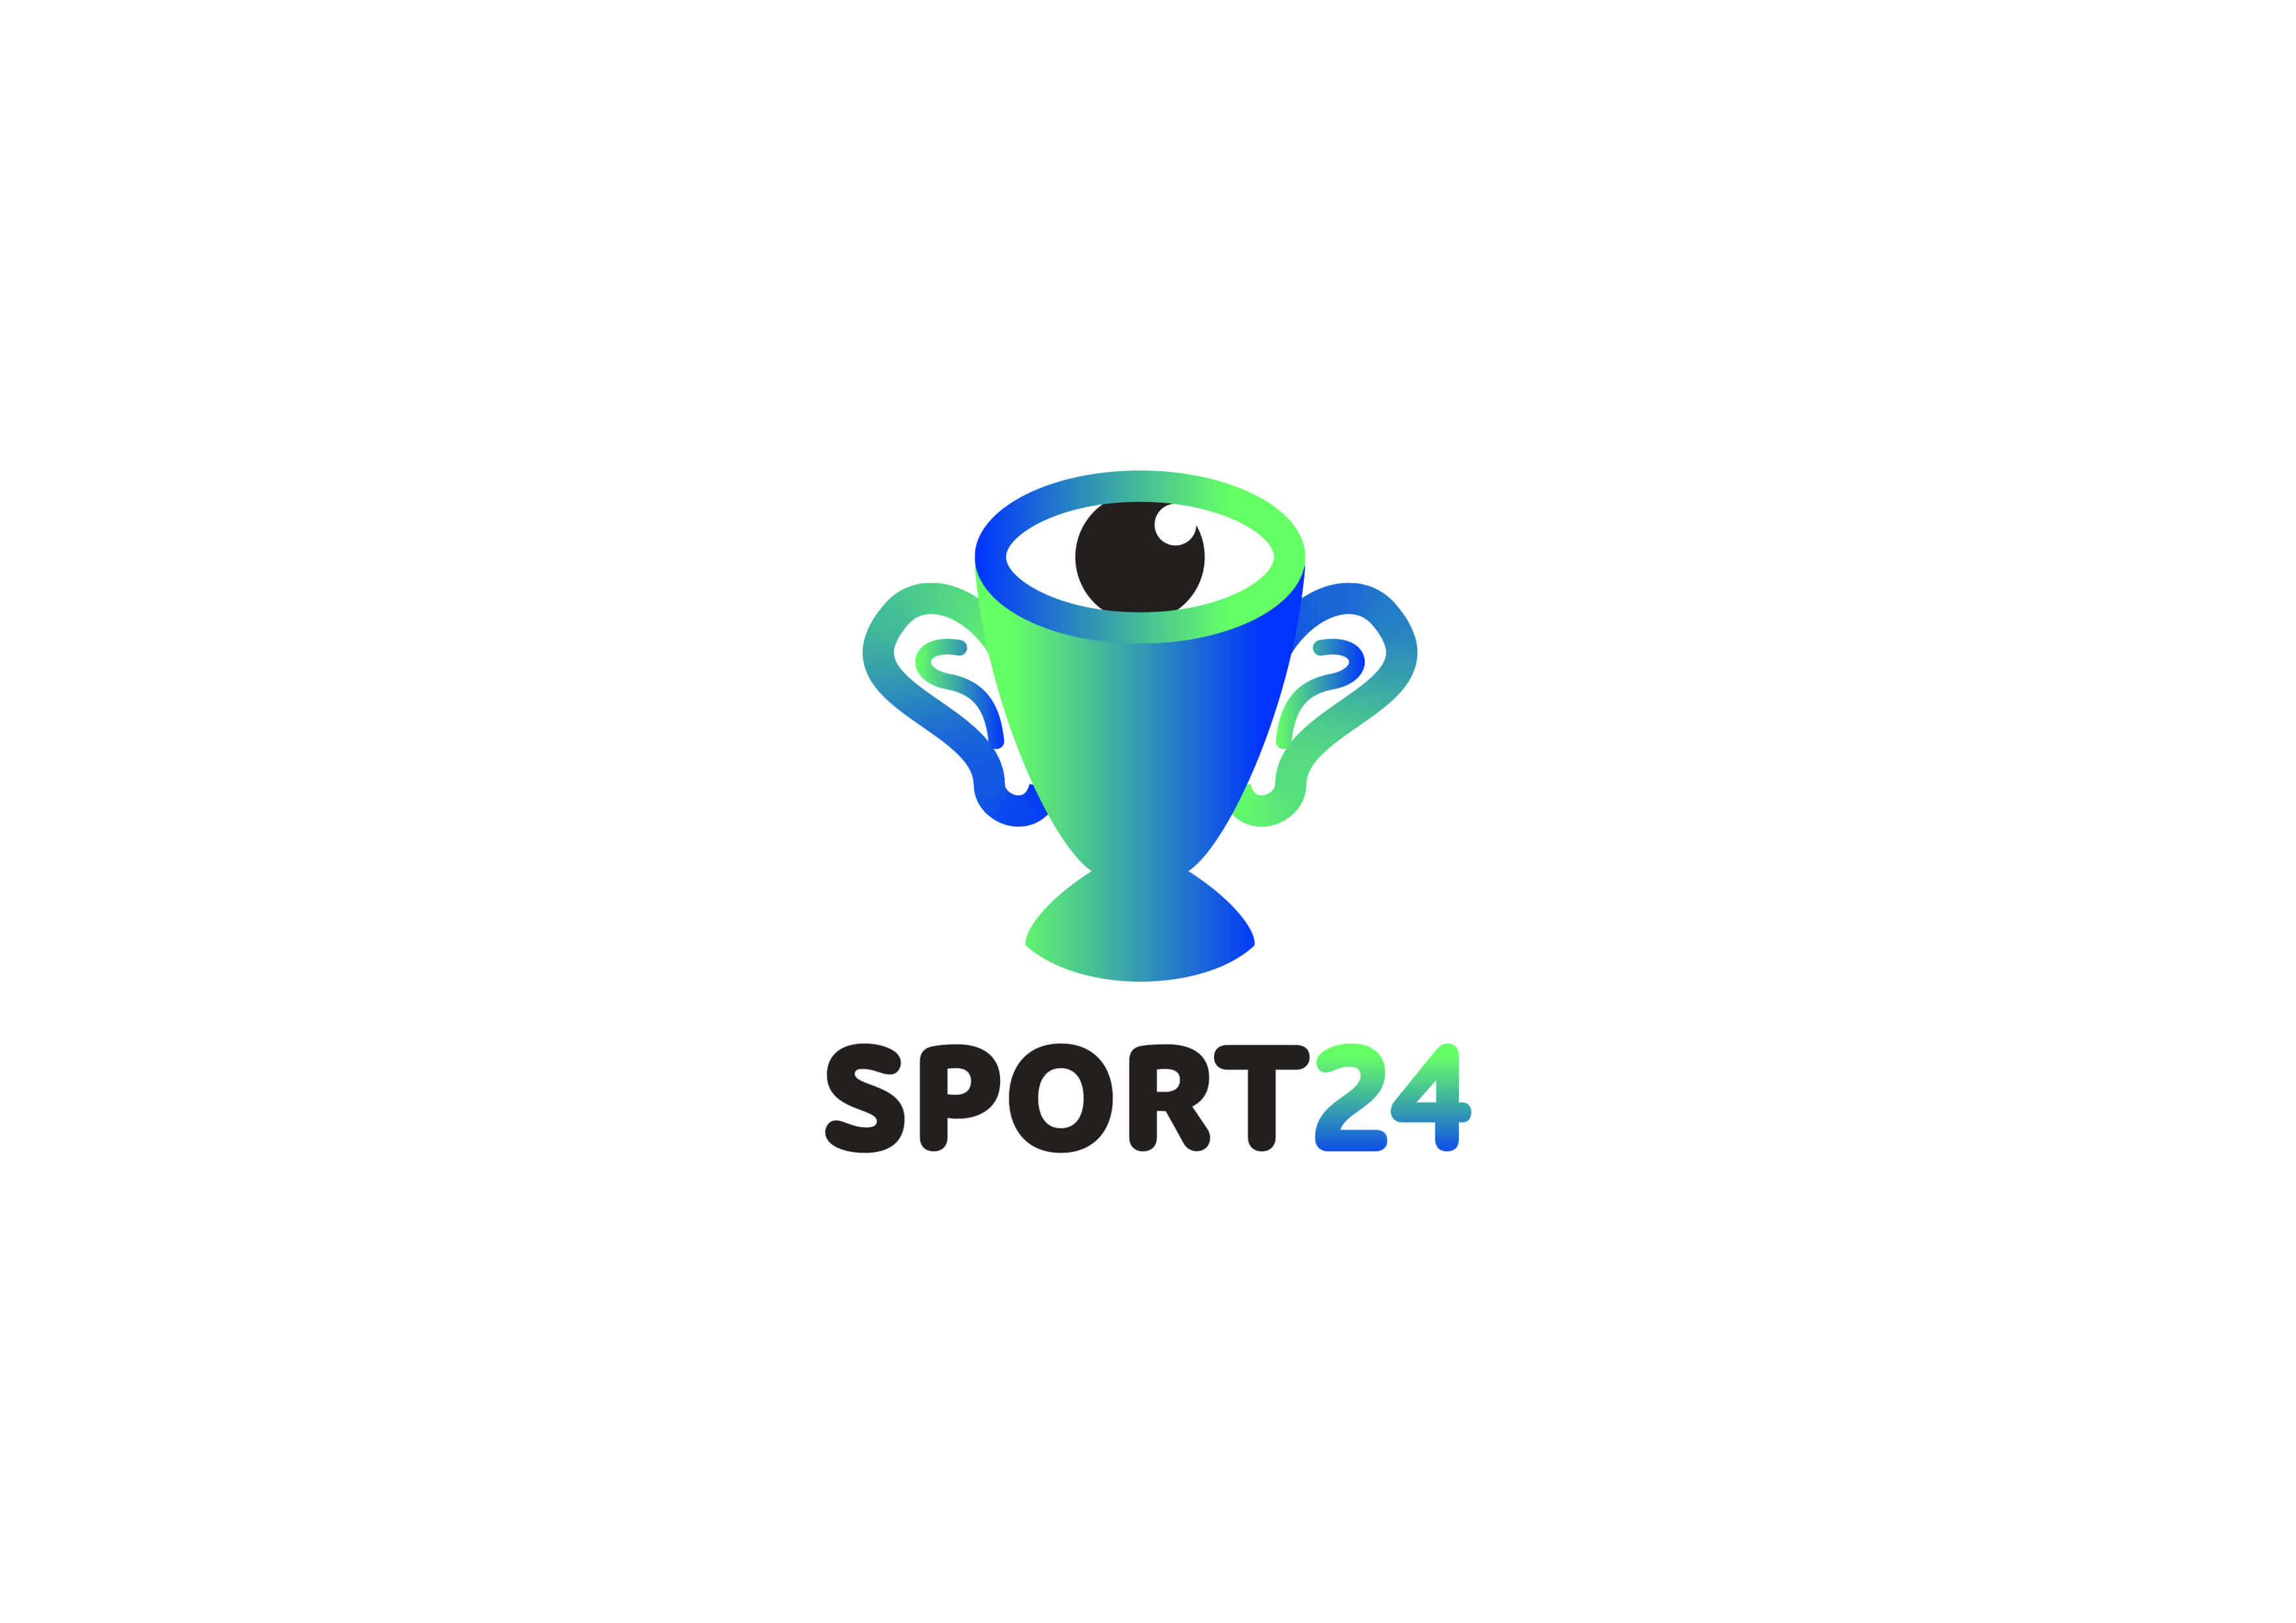 sport24 identity process 17